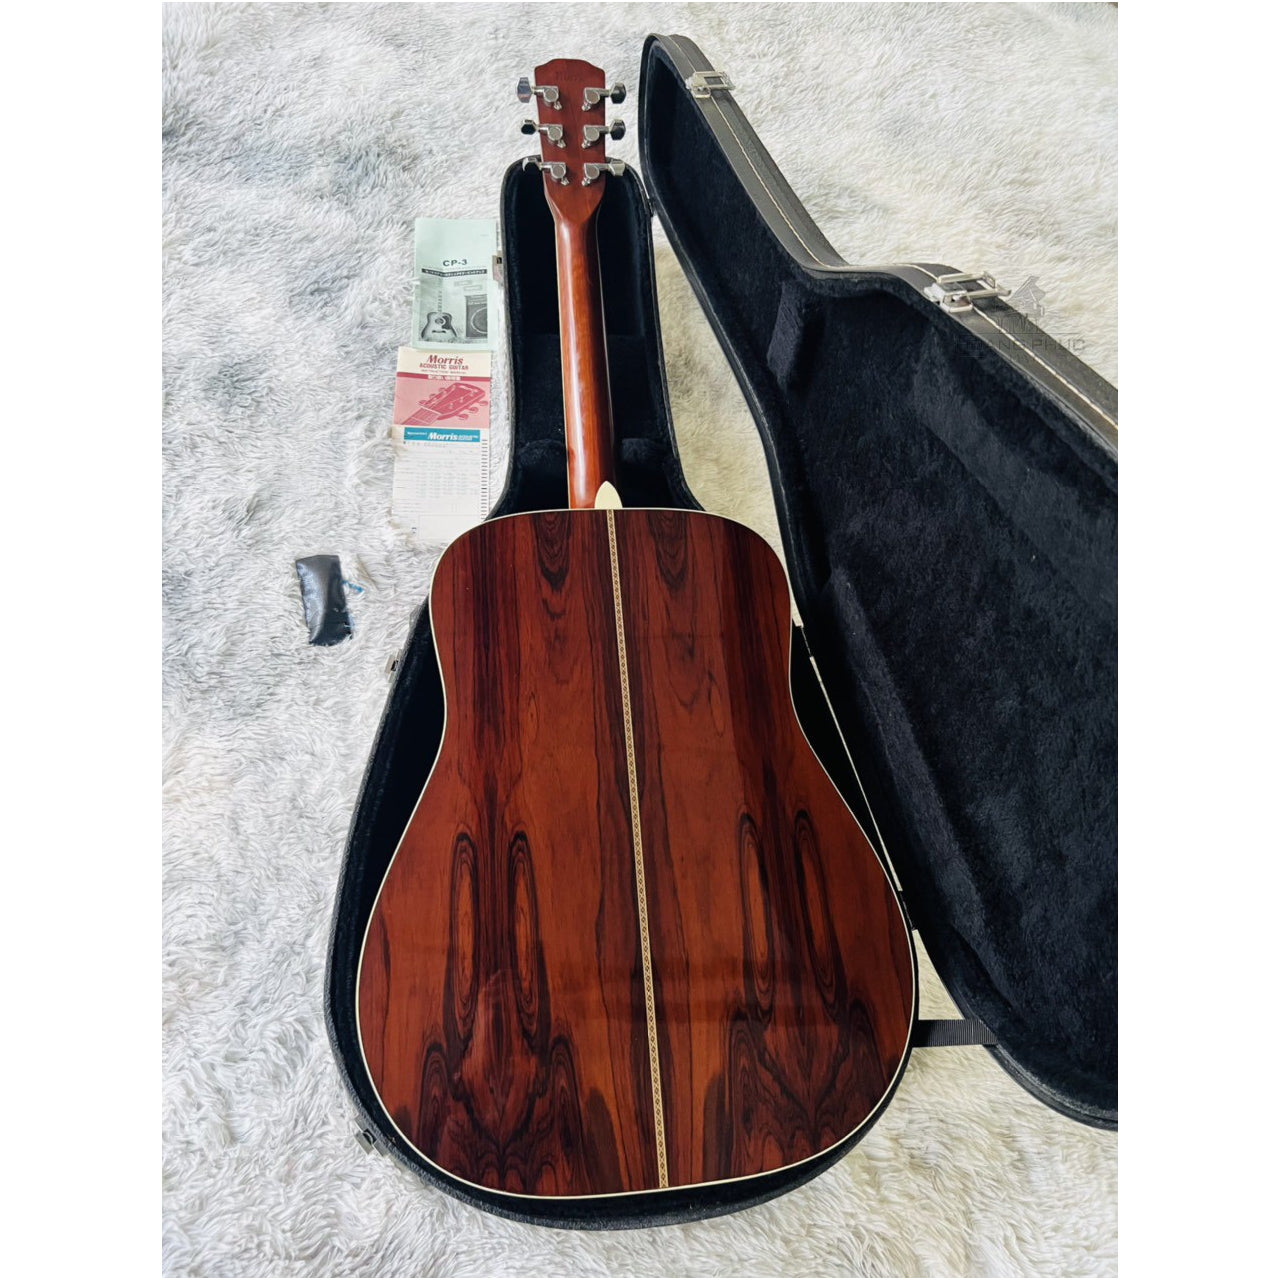 Đàn Guitar Acoustic Morris M50 - Qua Sử Dụng - Việt Music